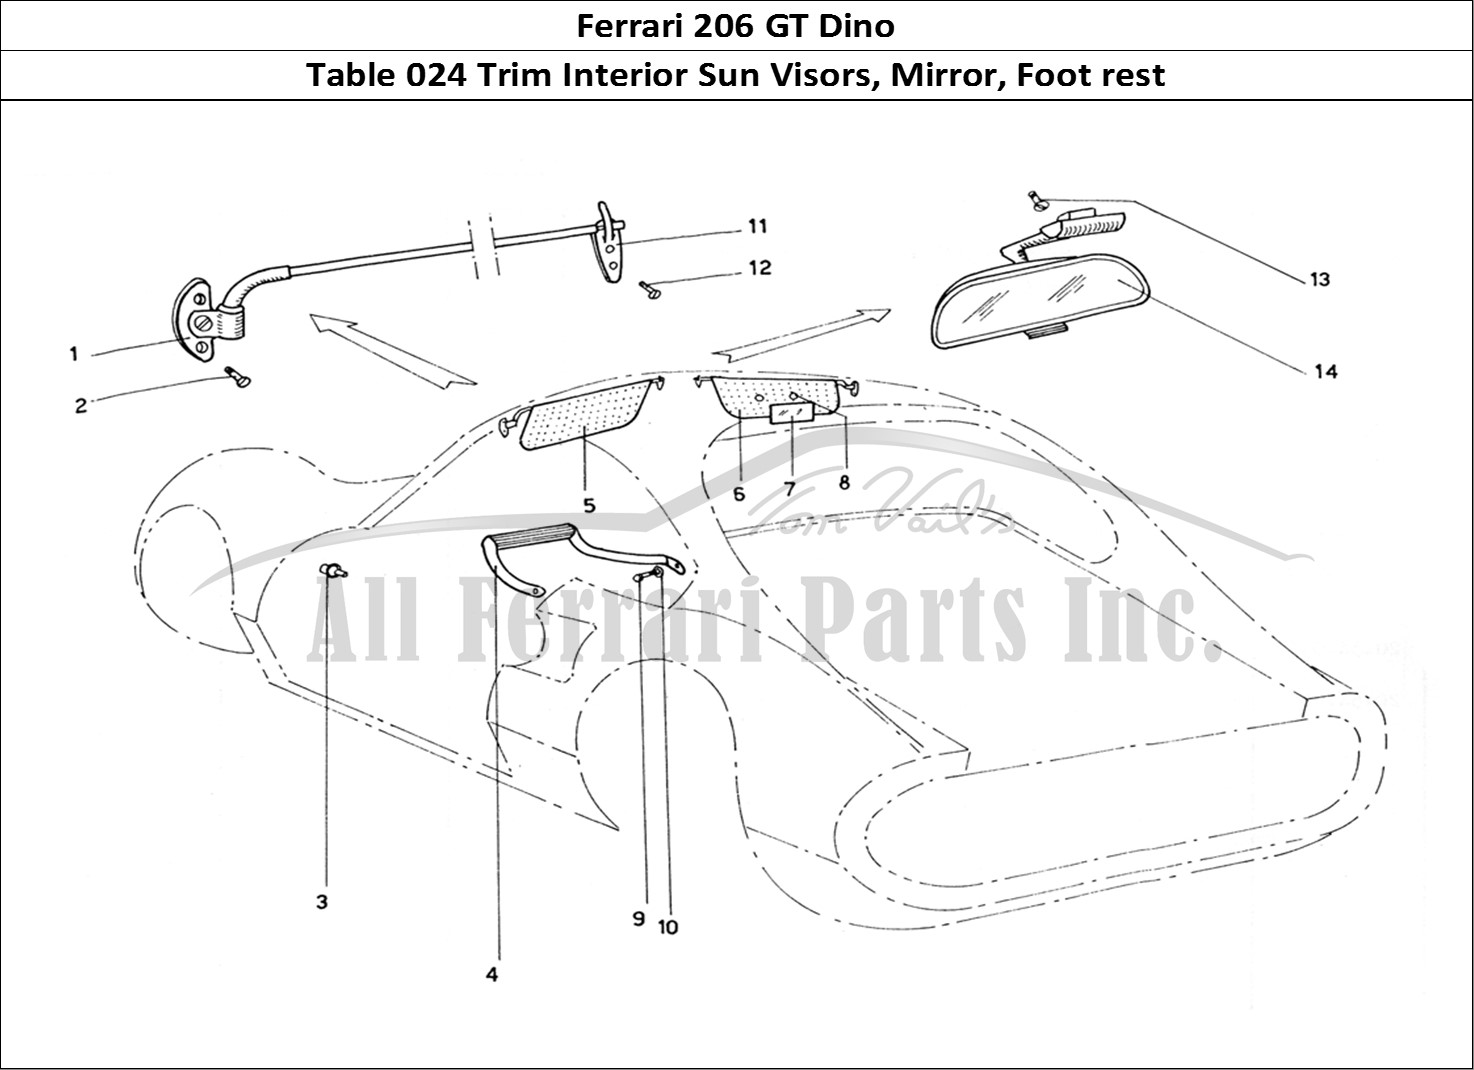 Ferrari Parts Ferrari 206 GT Dino (Coachwork) Page 024 Sun Visors & Rear View Mi